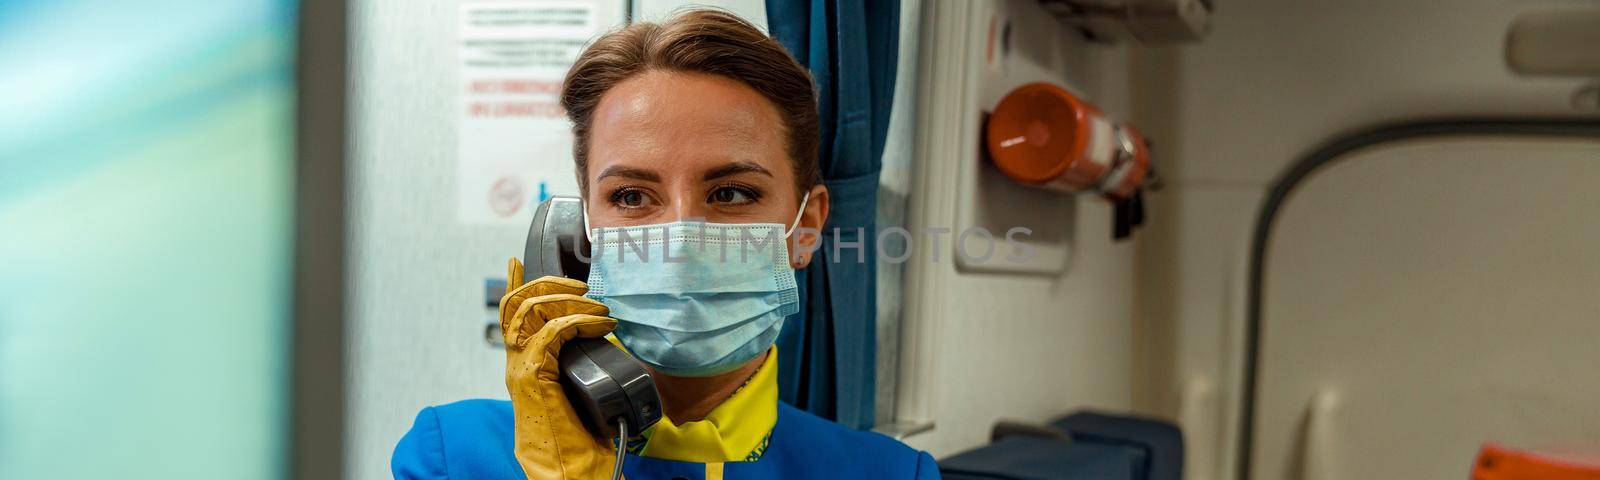 Stewardess in medical mask using telephone in aircraft cabin by Yaroslav_astakhov